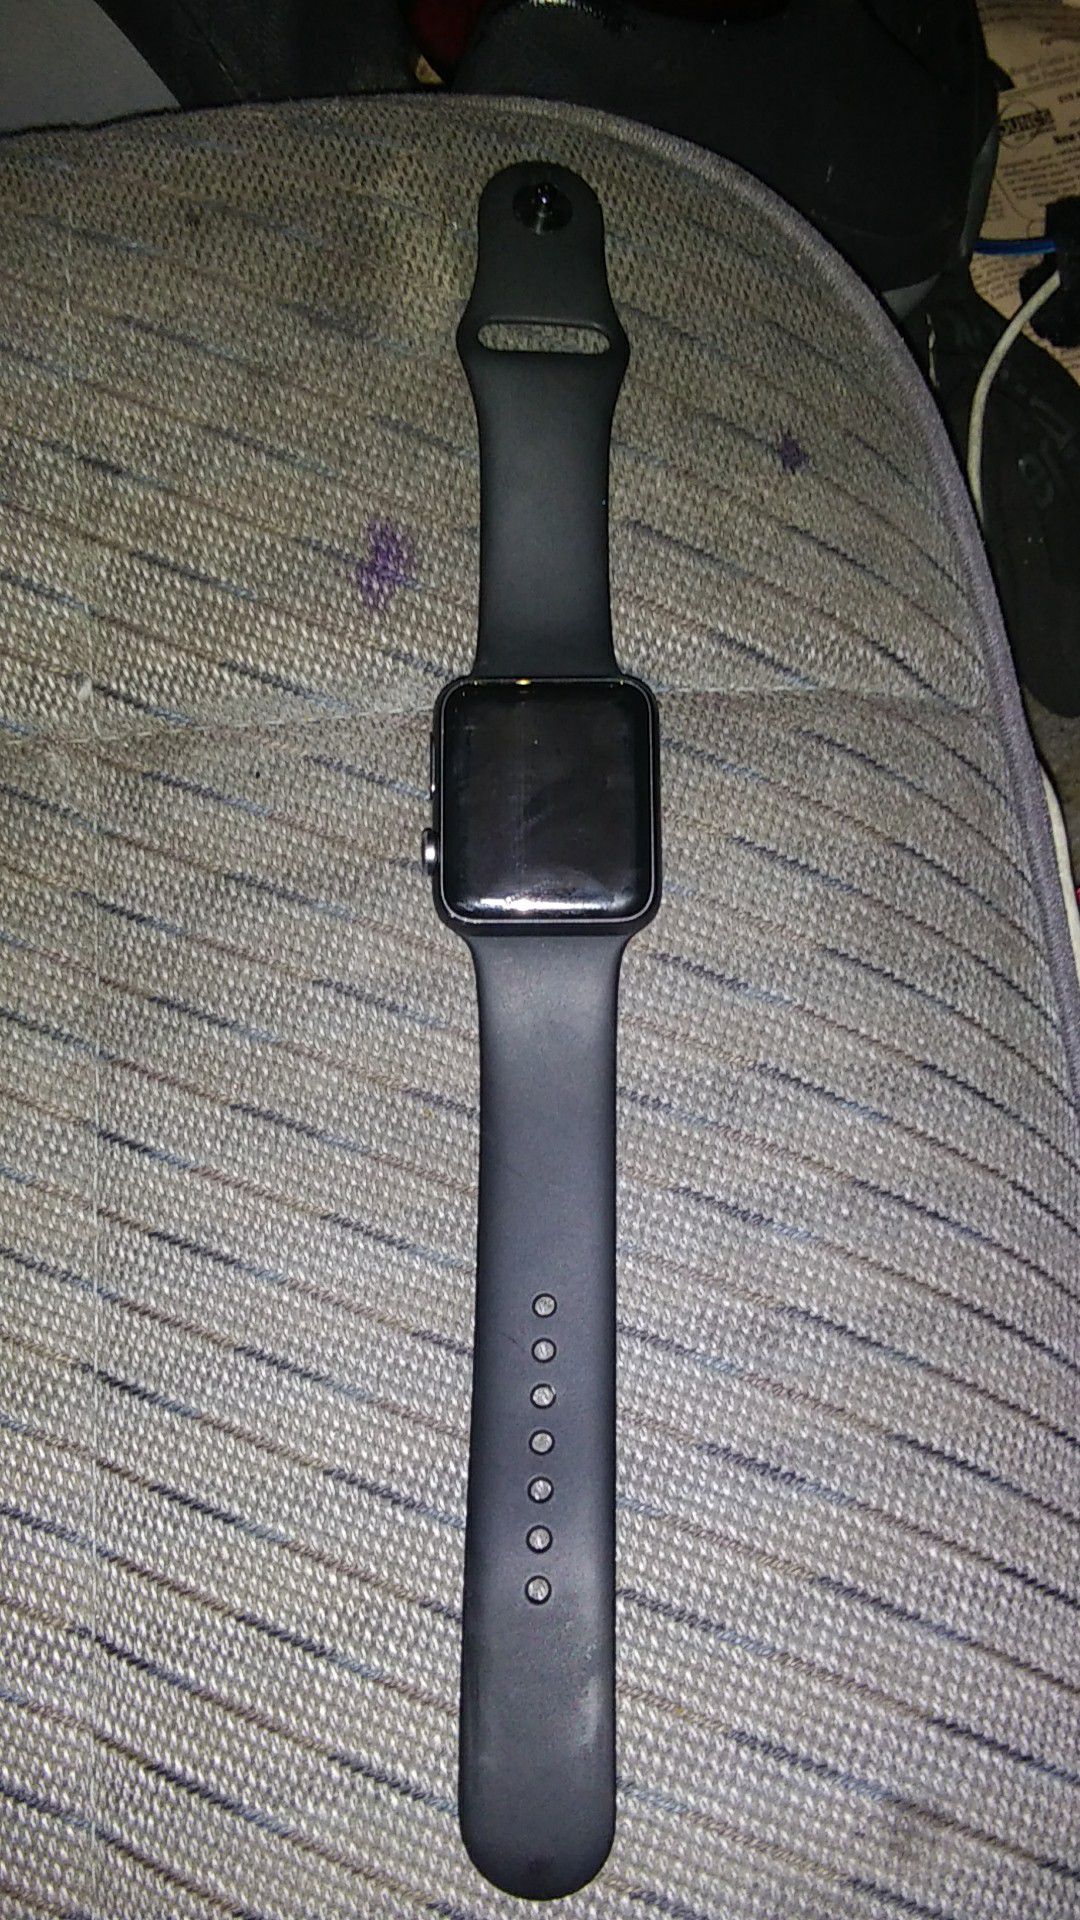 WR-IPX7 Series1 apple watch cheap